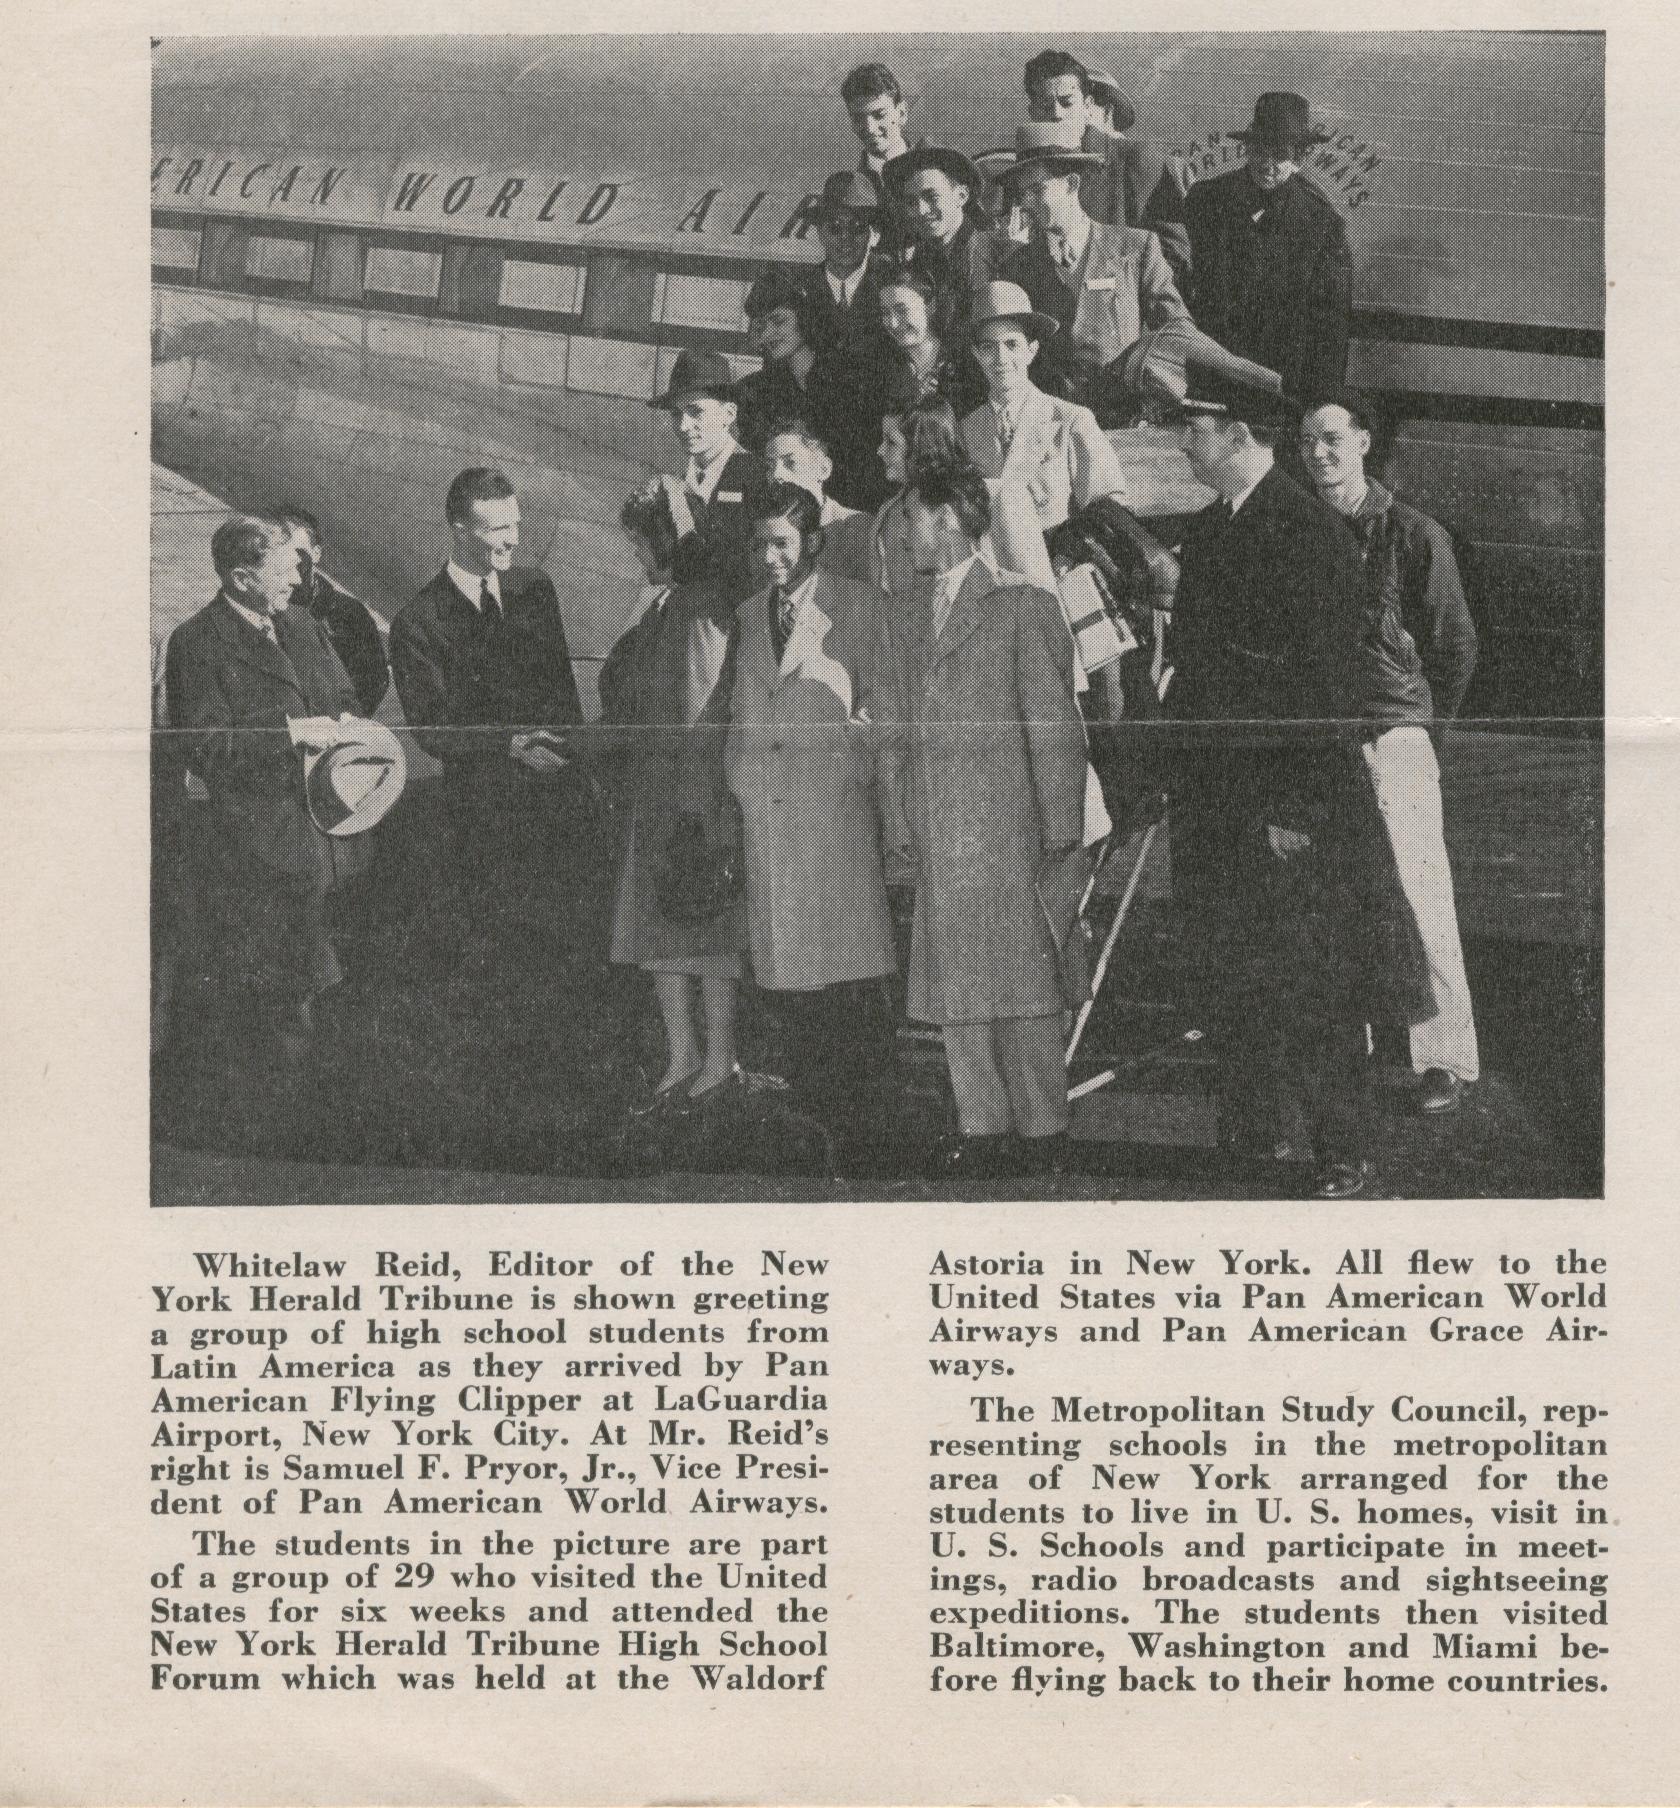 1947 Pan Am Vice President Sam Pryor greeting Latin American exchange students at New York LaGuardia airport